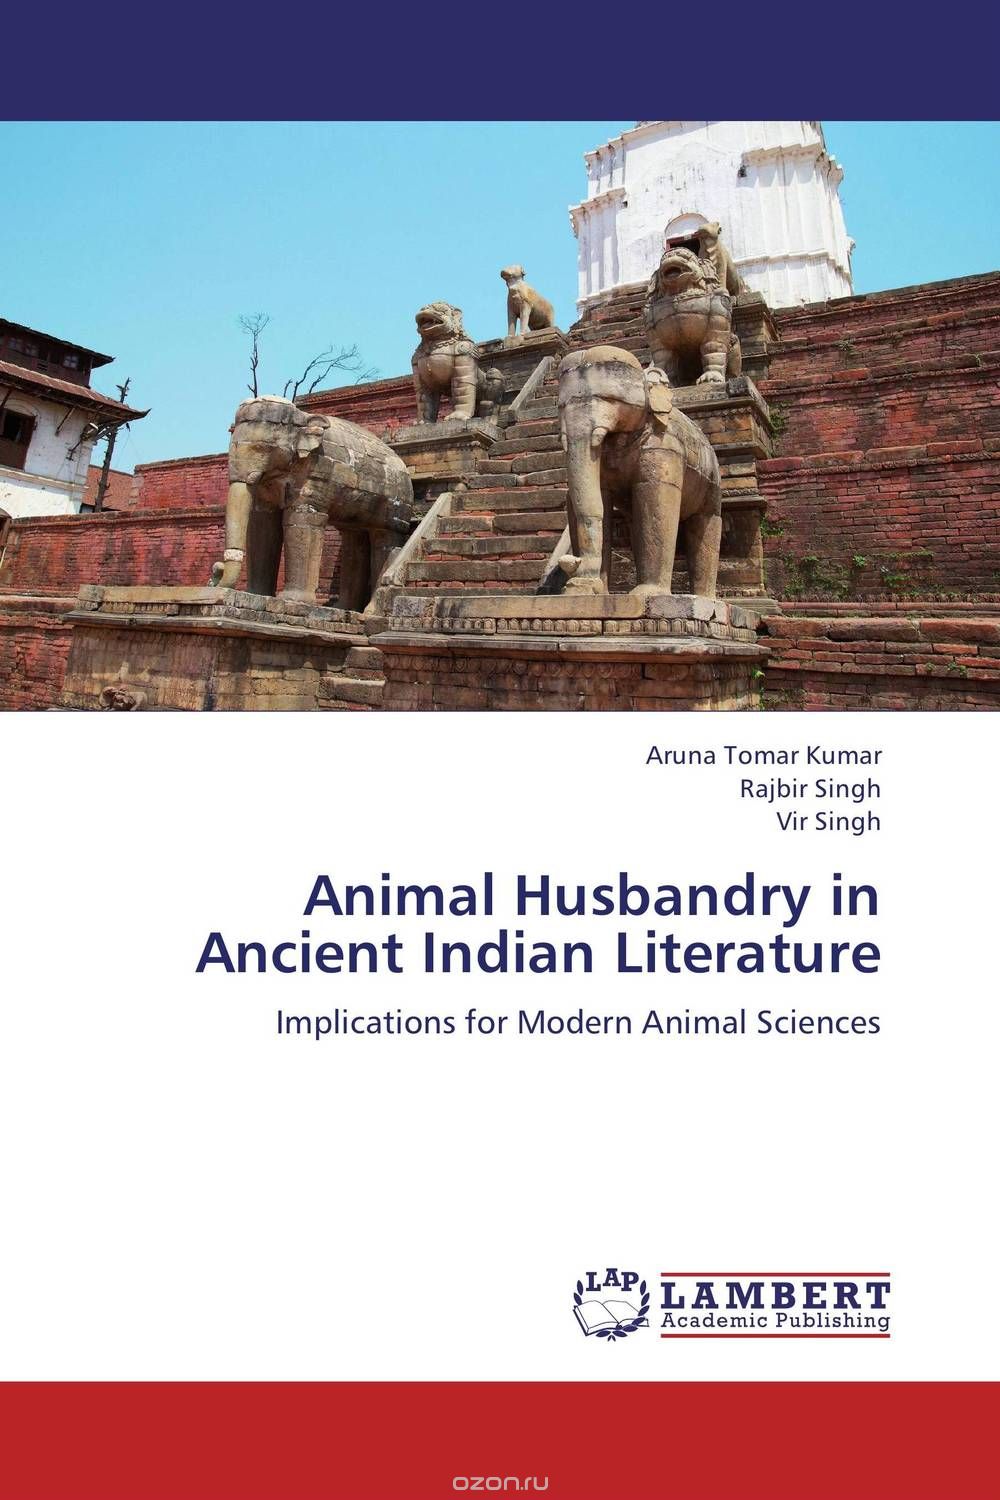 Скачать книгу "Animal Husbandry in Ancient Indian Literature"